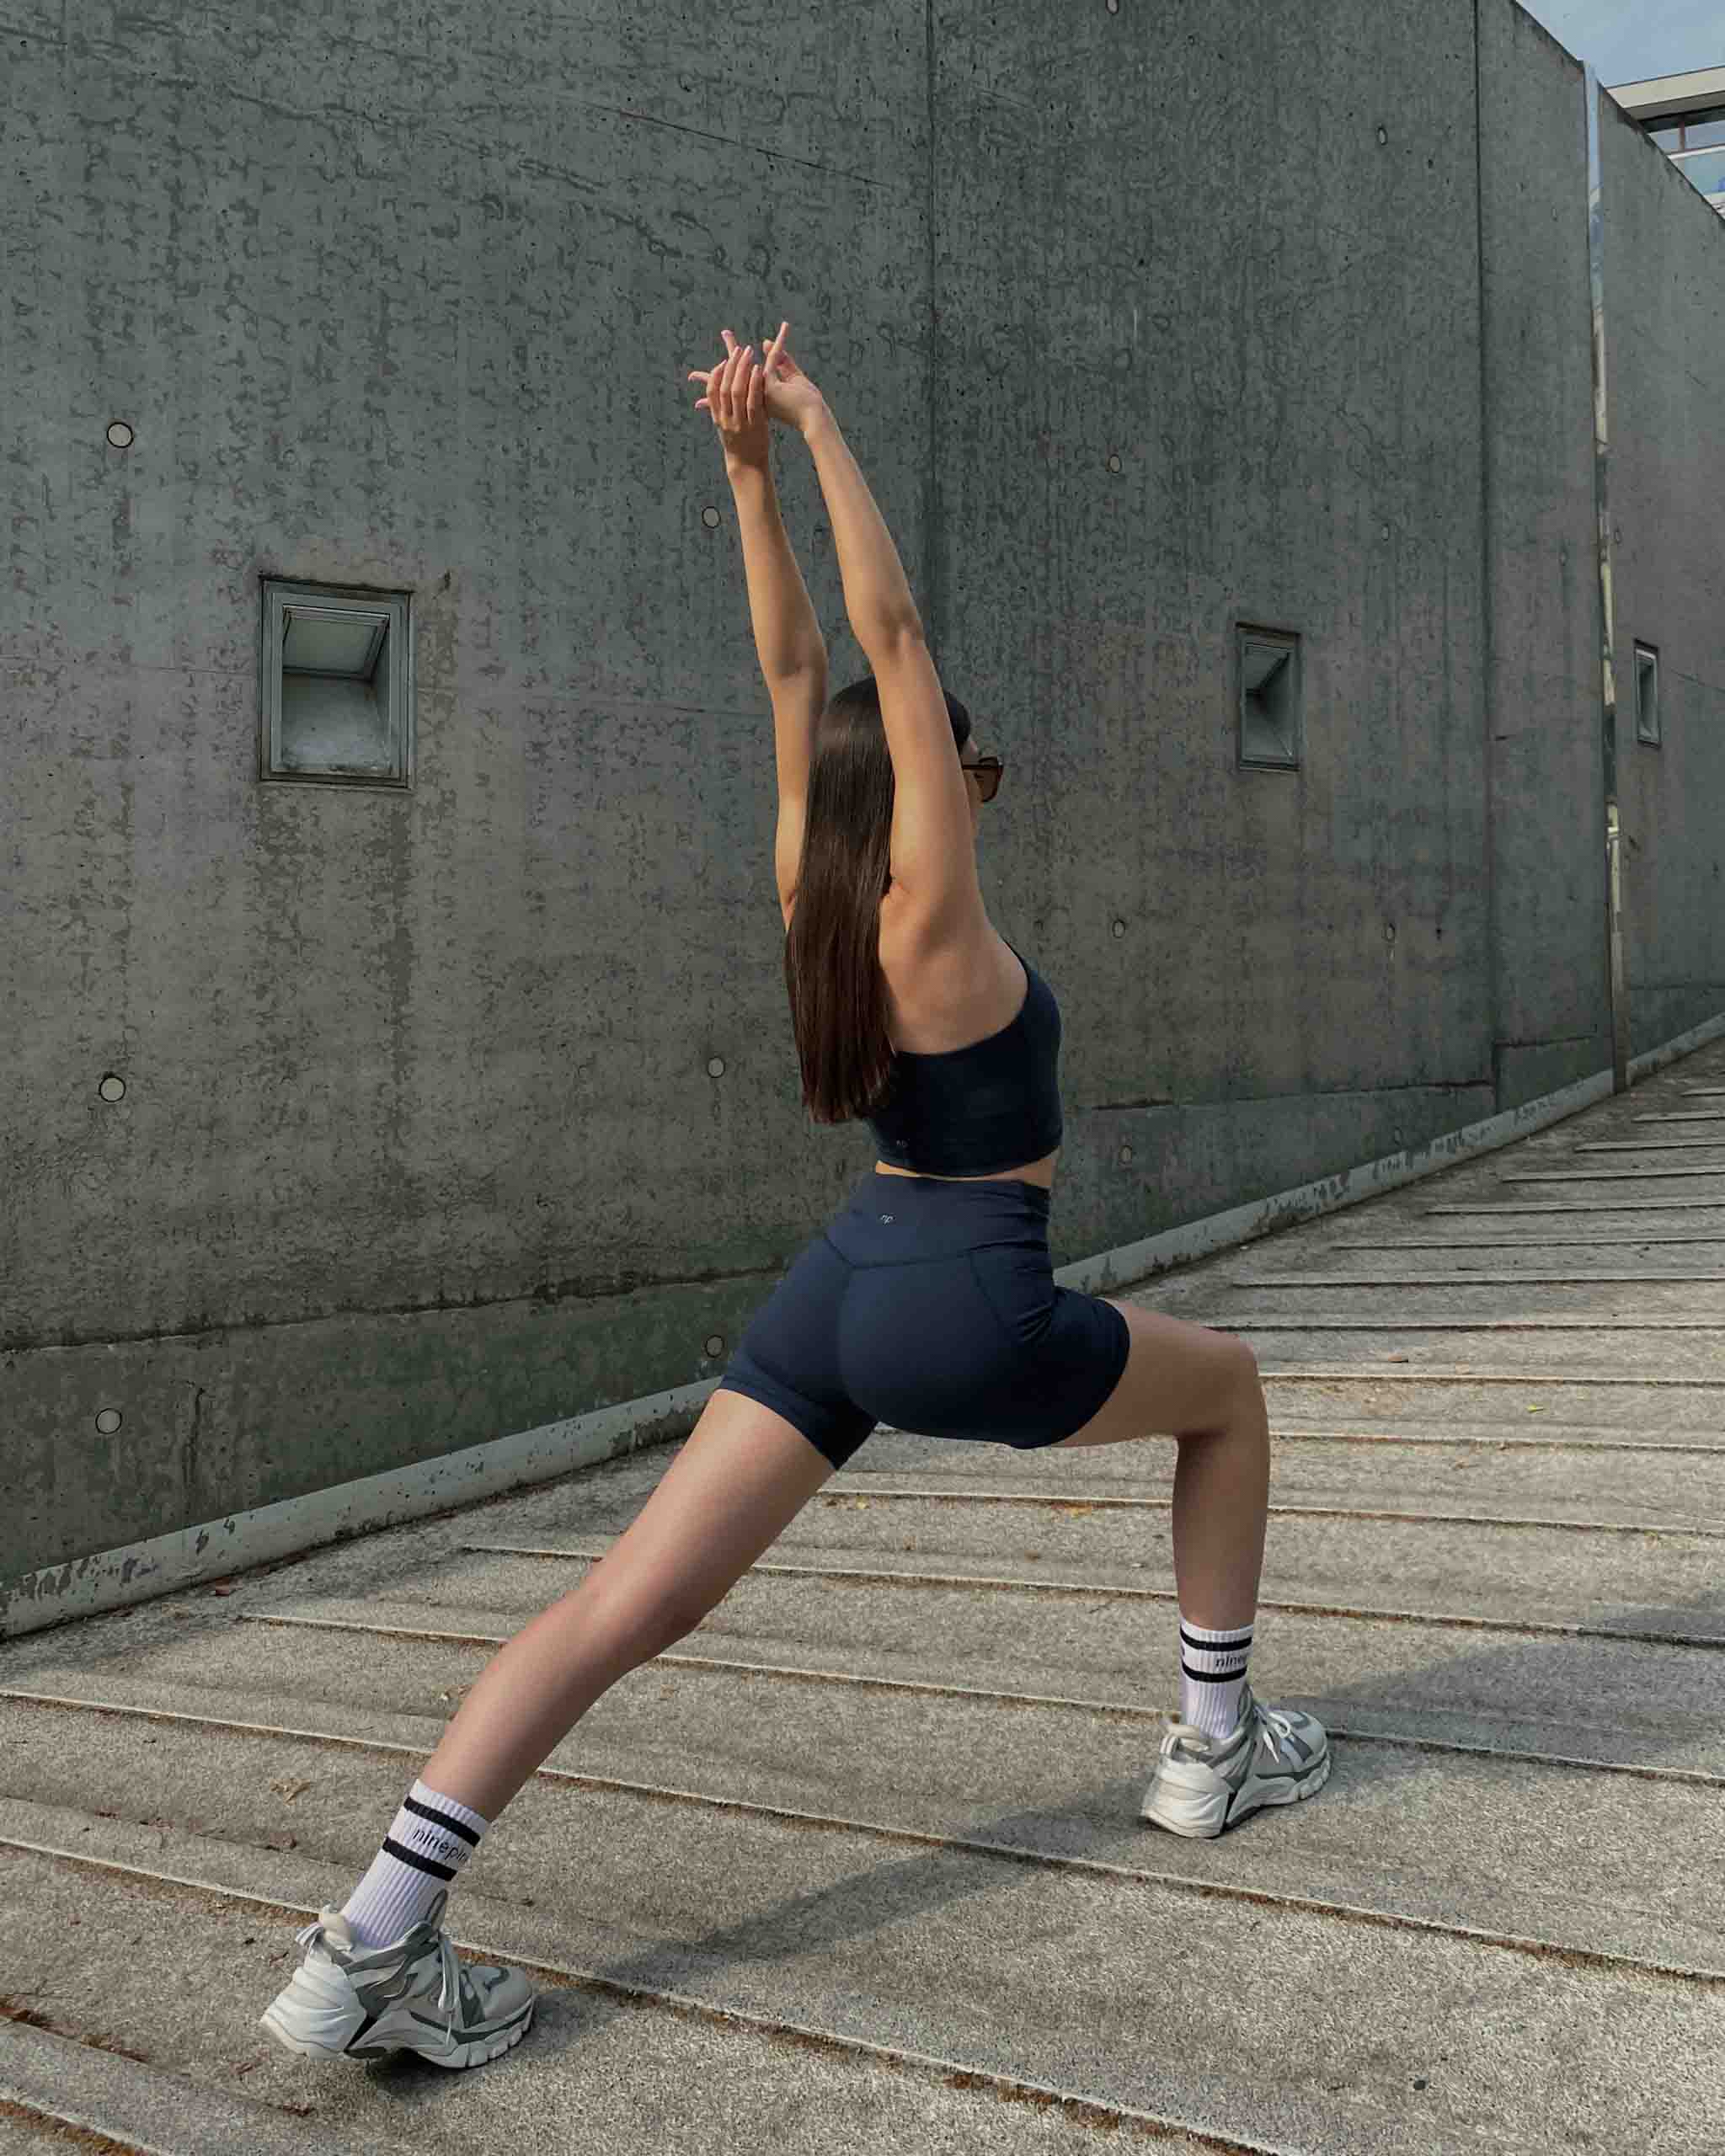 Girl in ninepine set stretching on concrete ramp